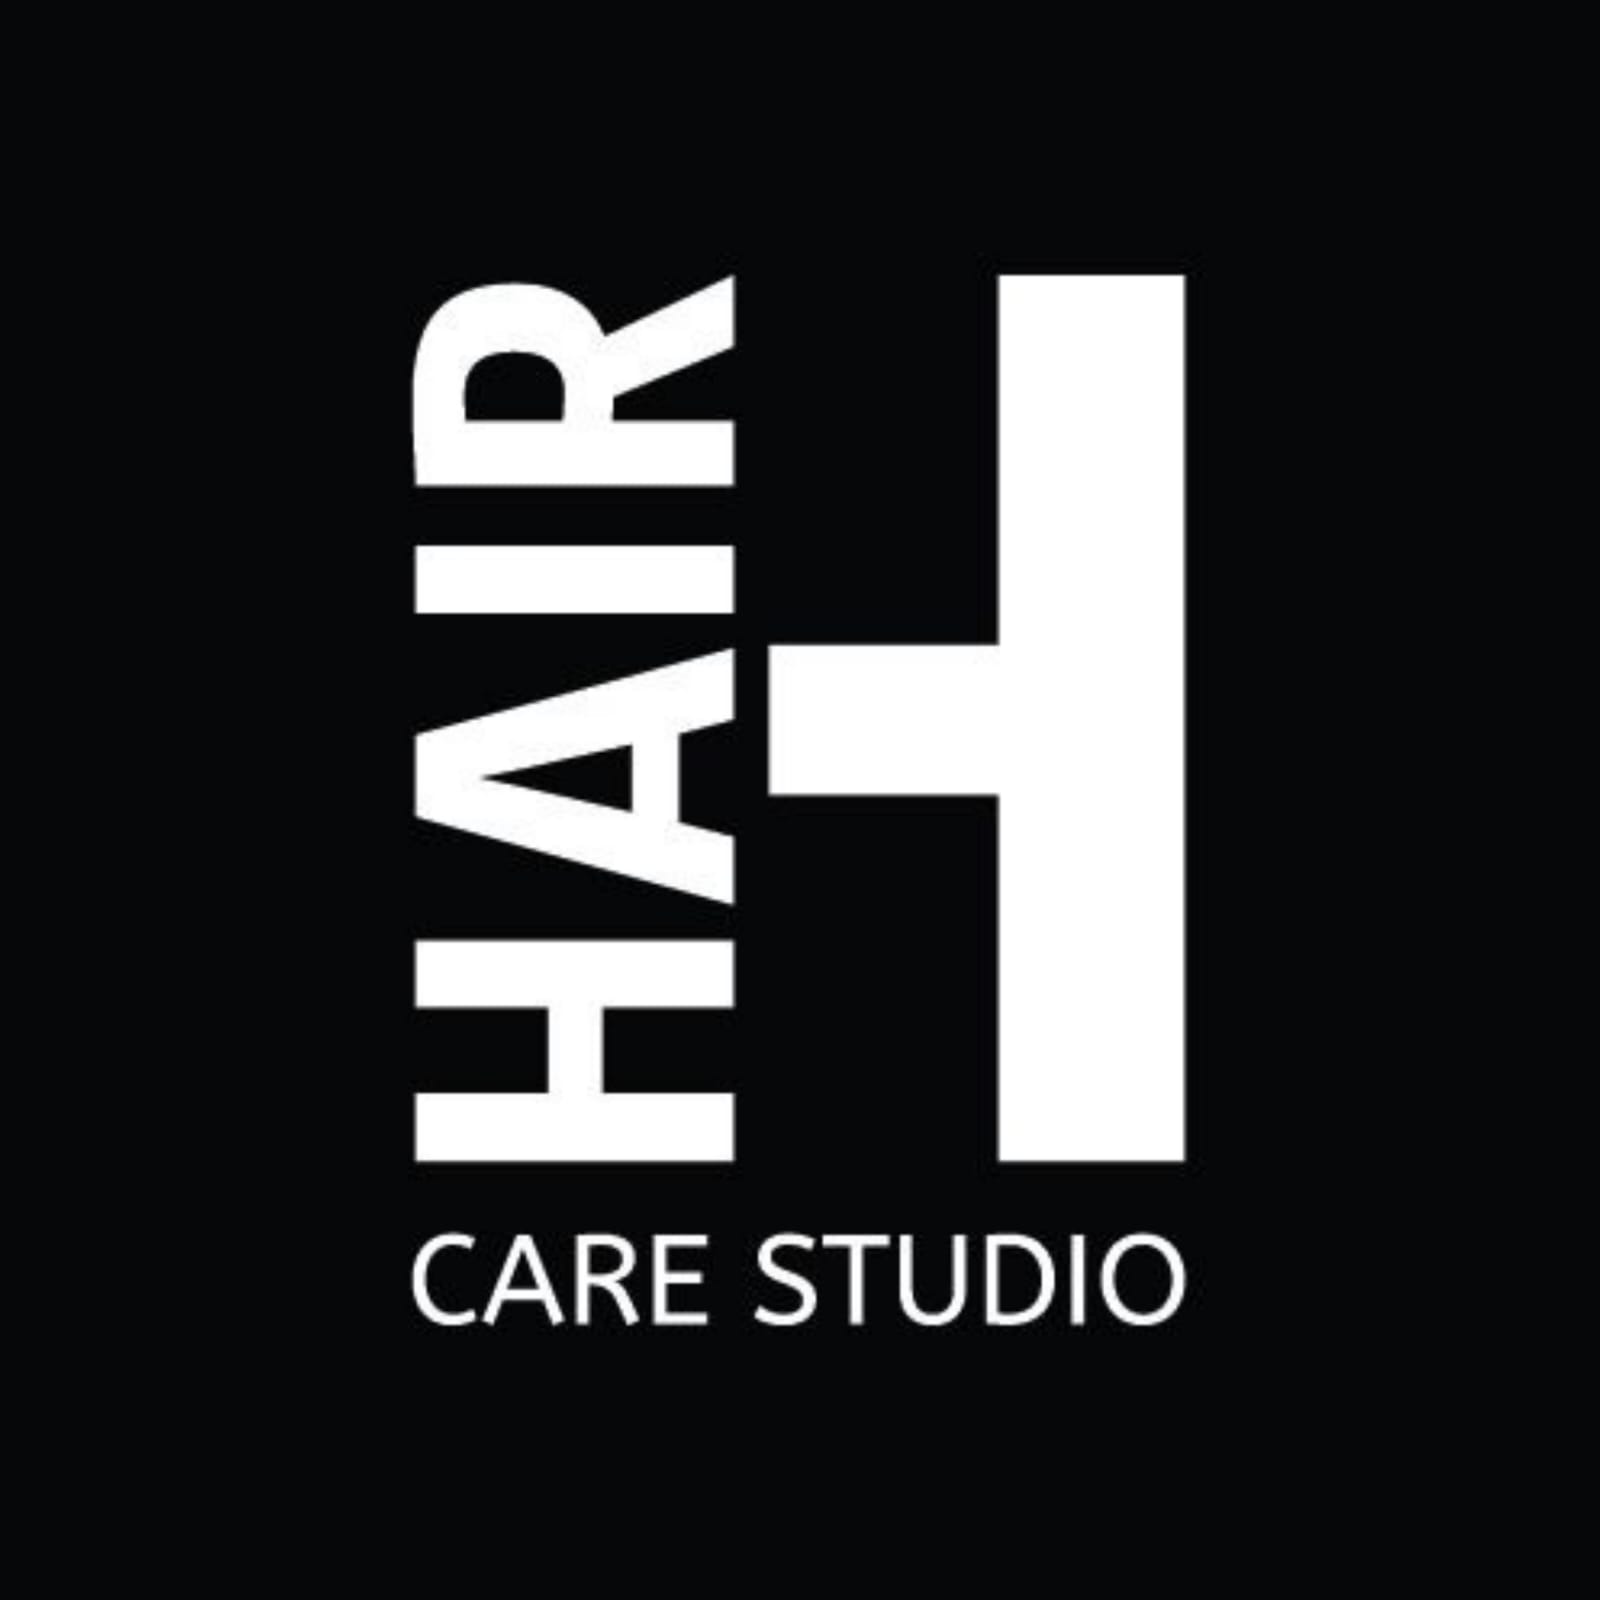 Hair Care Studio And Academy